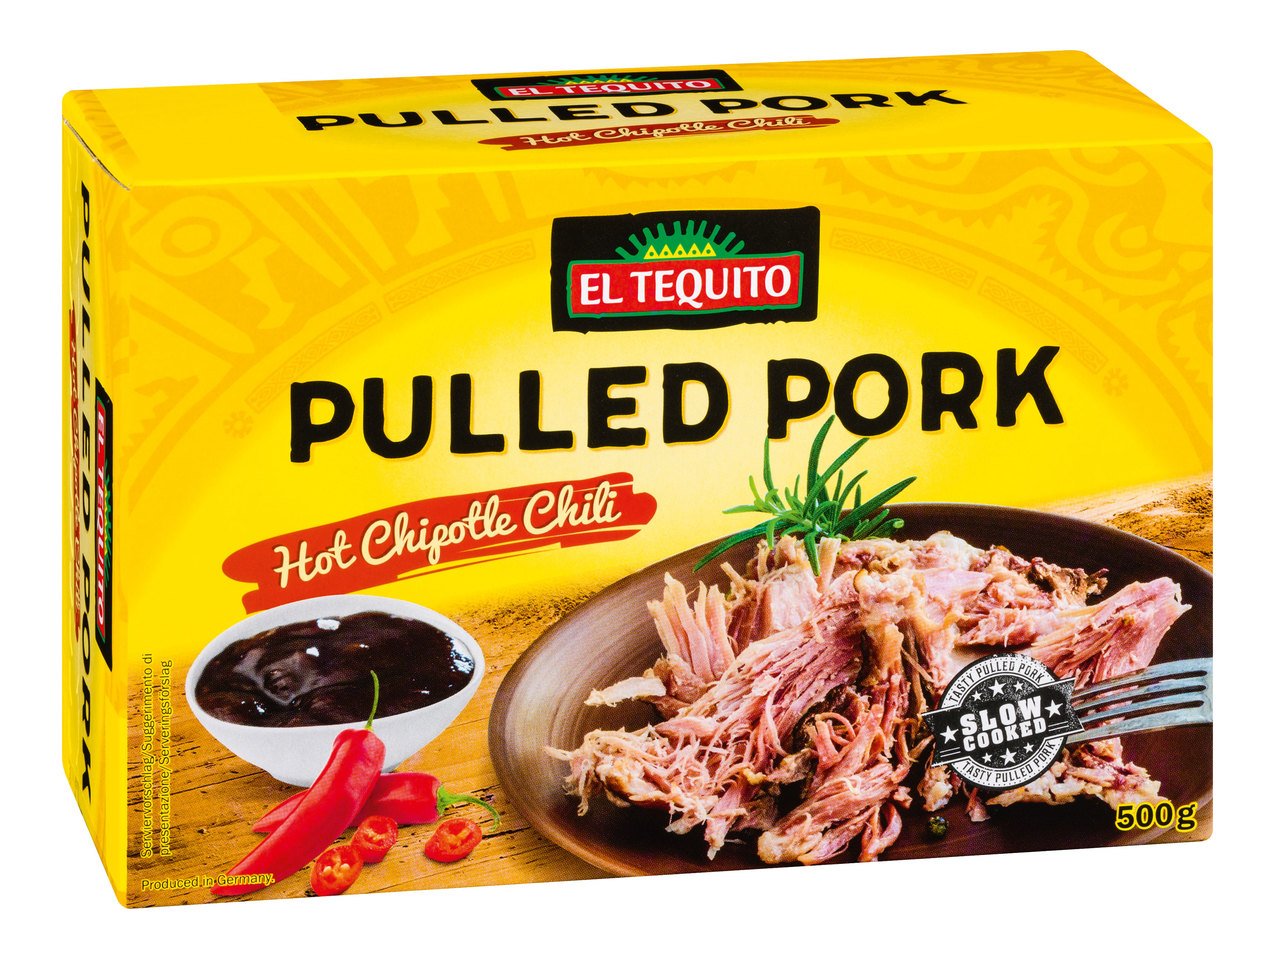 EL TEQUITO Pulled Pork